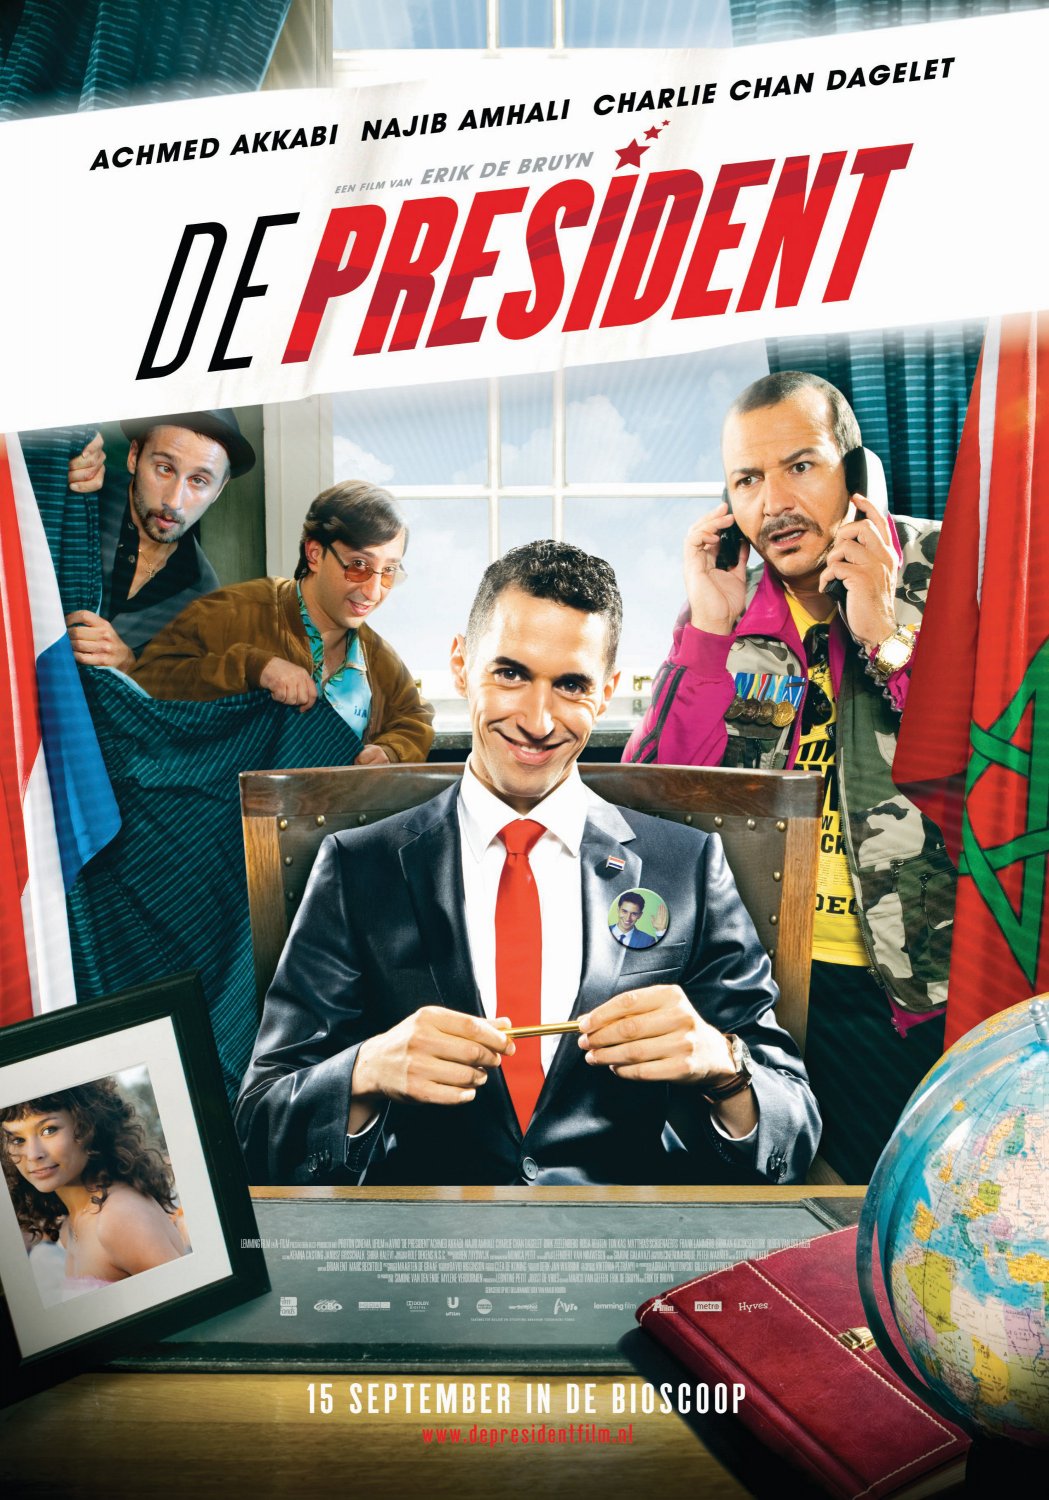 De president movie